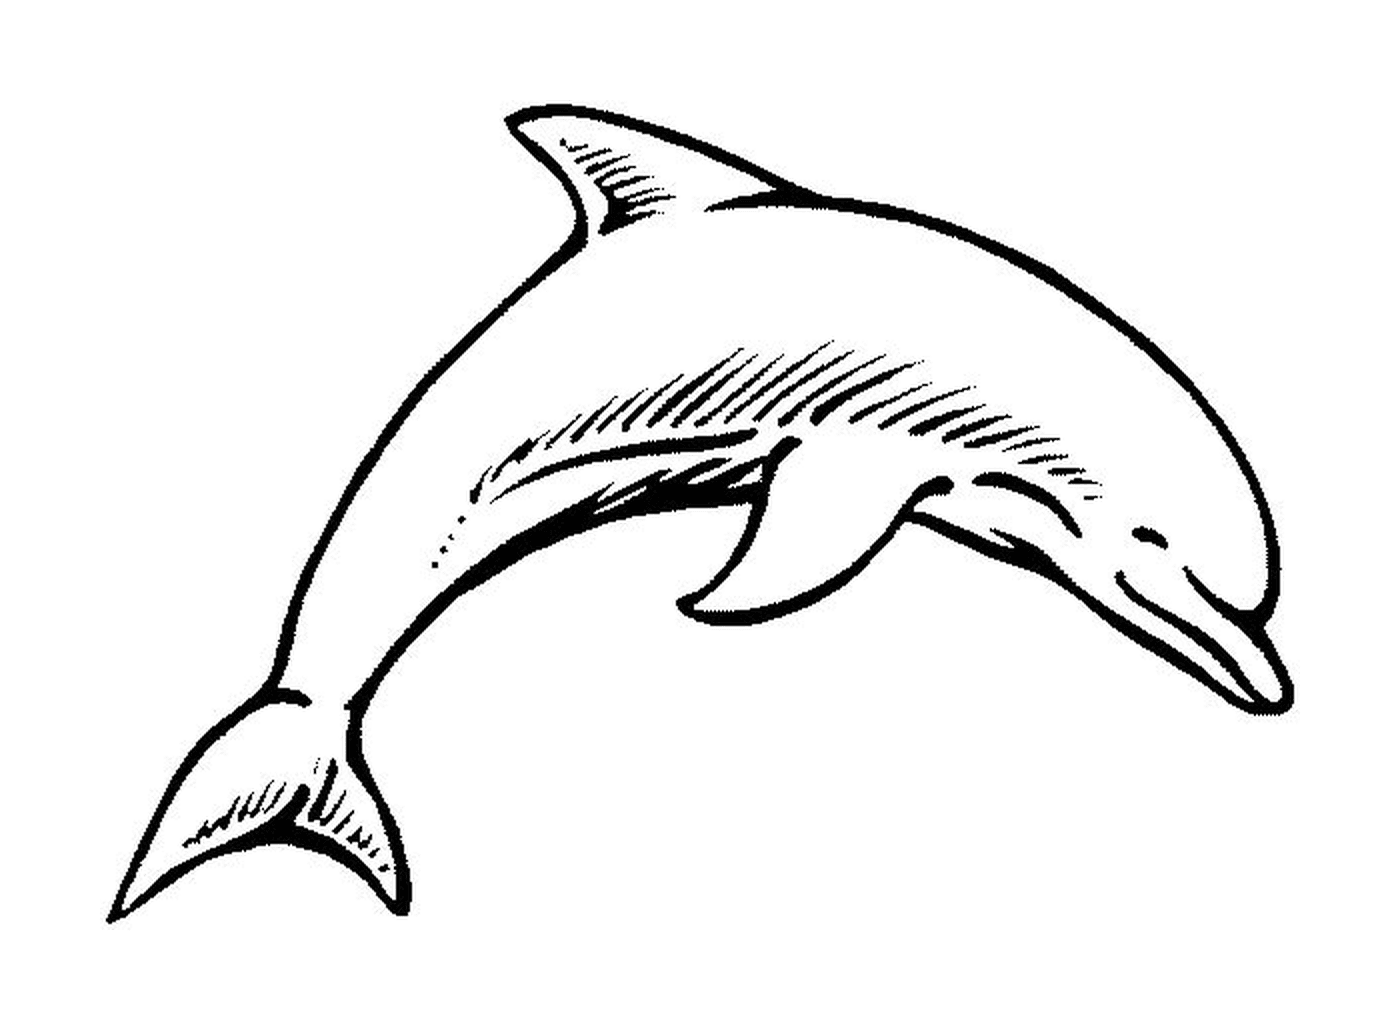  Un delfino 